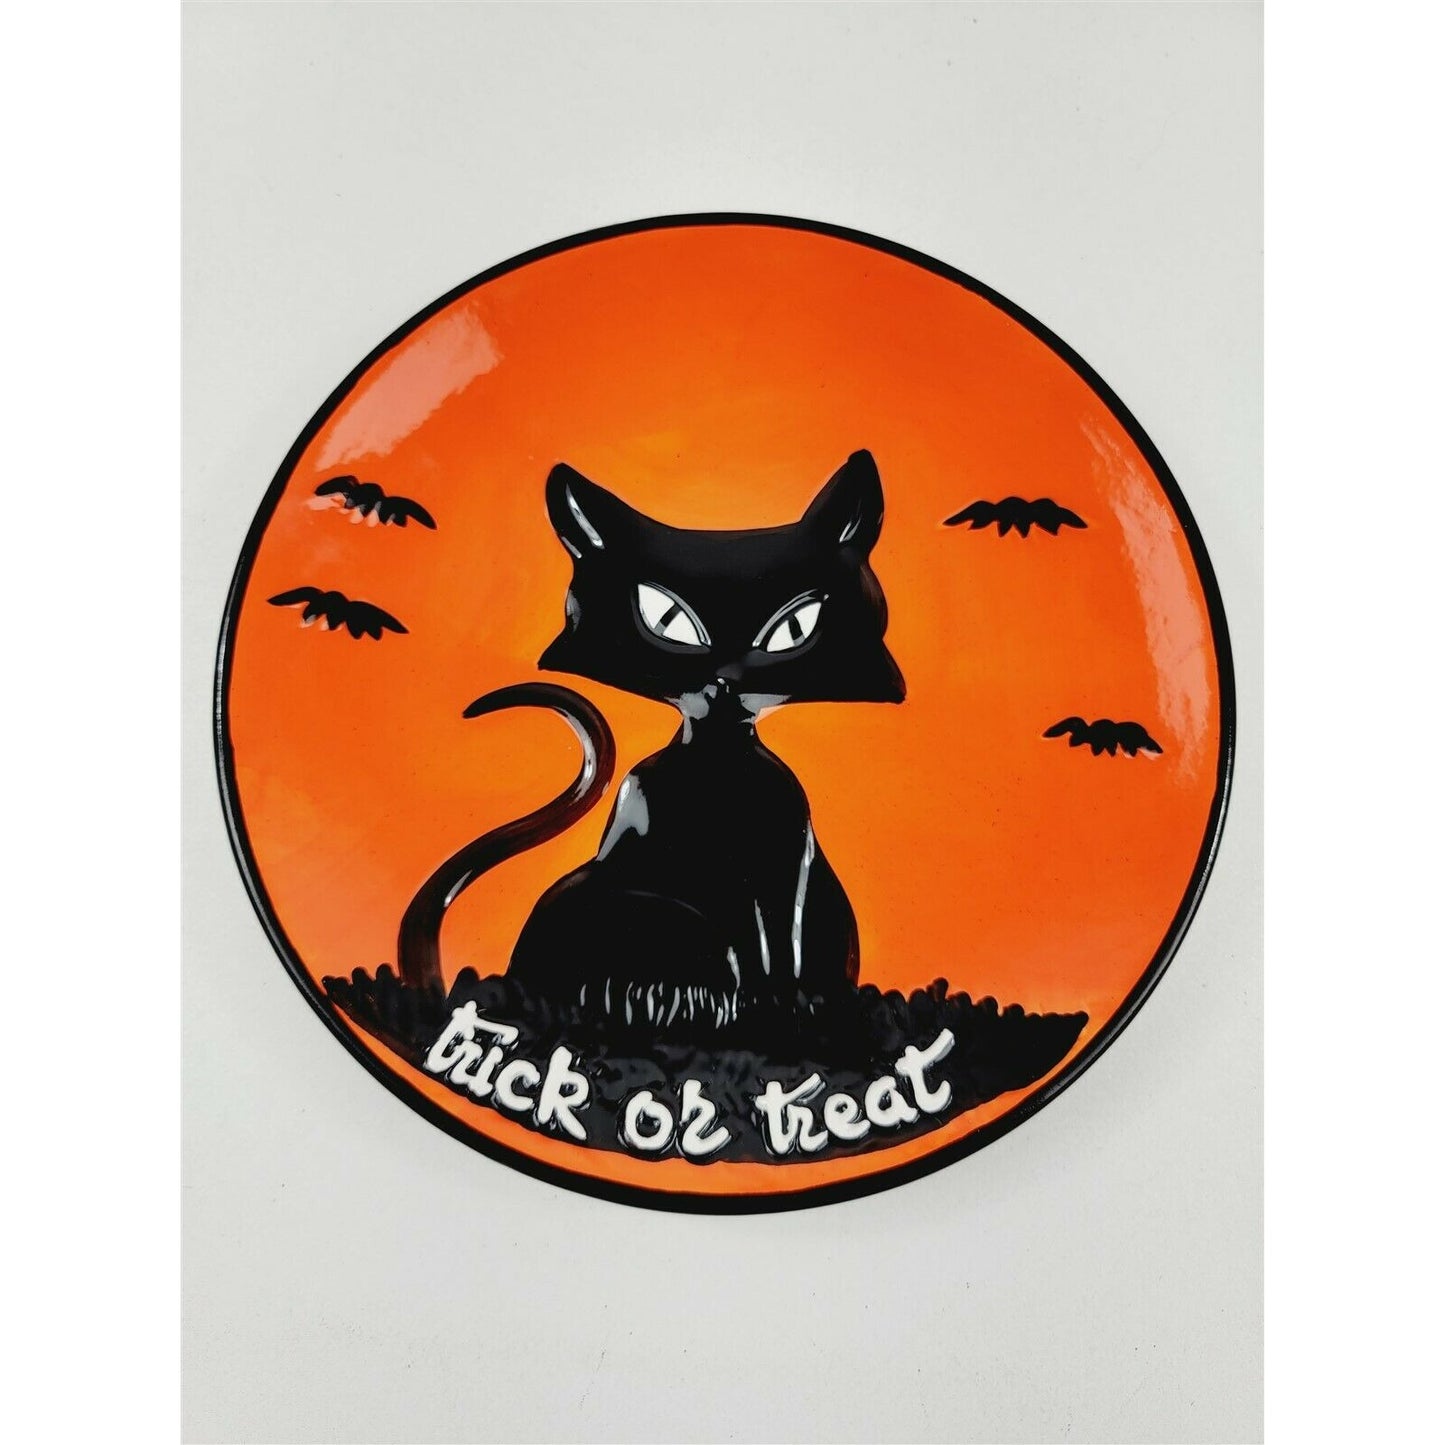 2 Hand Painted Happy Halloween Plates Orange Black Spider Web Black Cat 8"